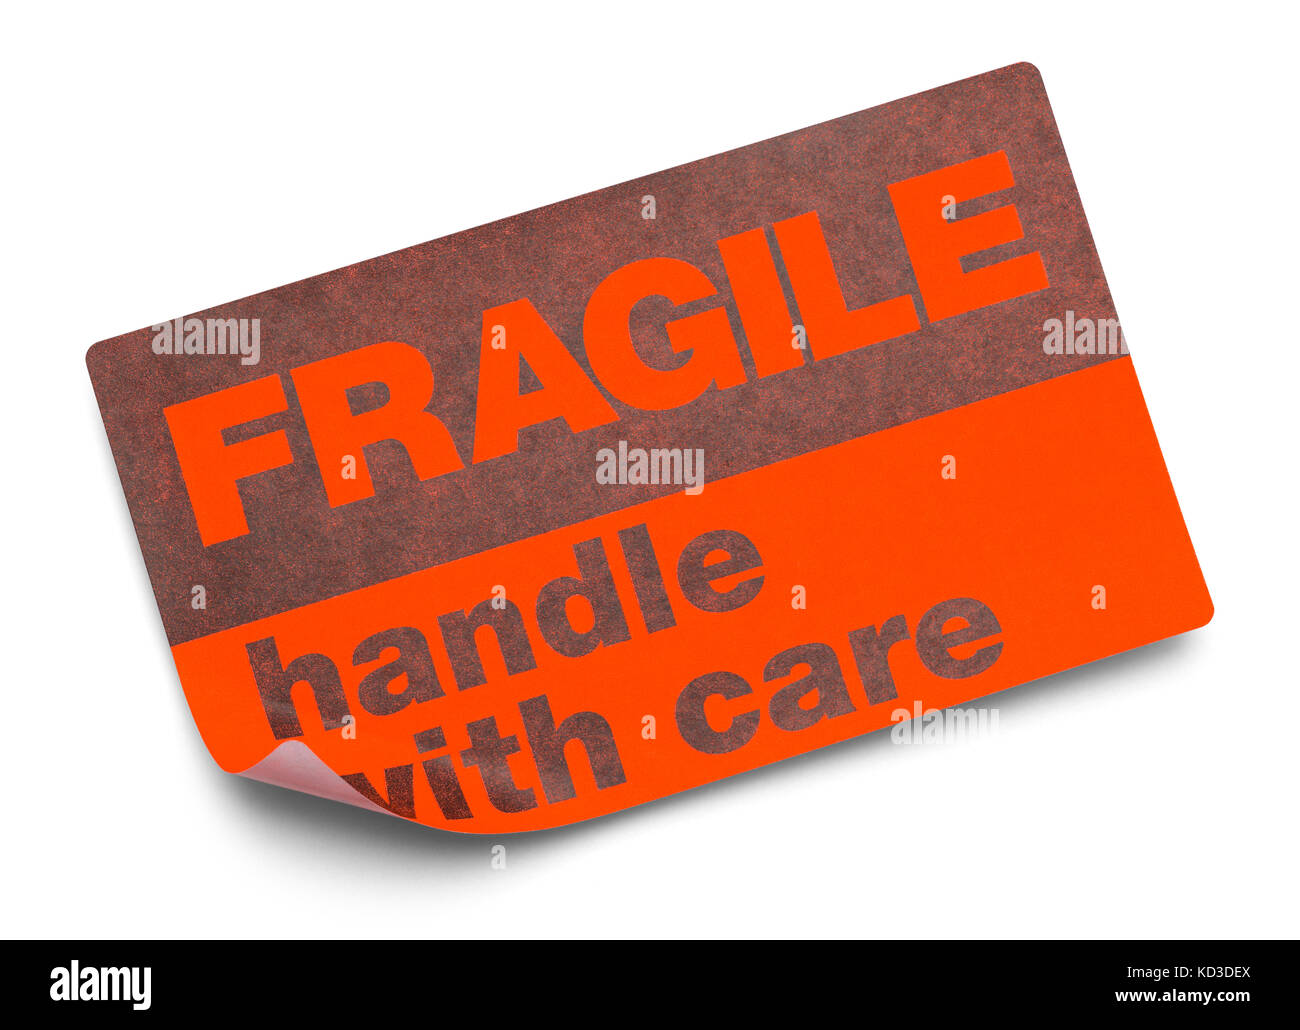 Orange Fragile Sticker Handle With Care Isolated on White Background. Stock Photo